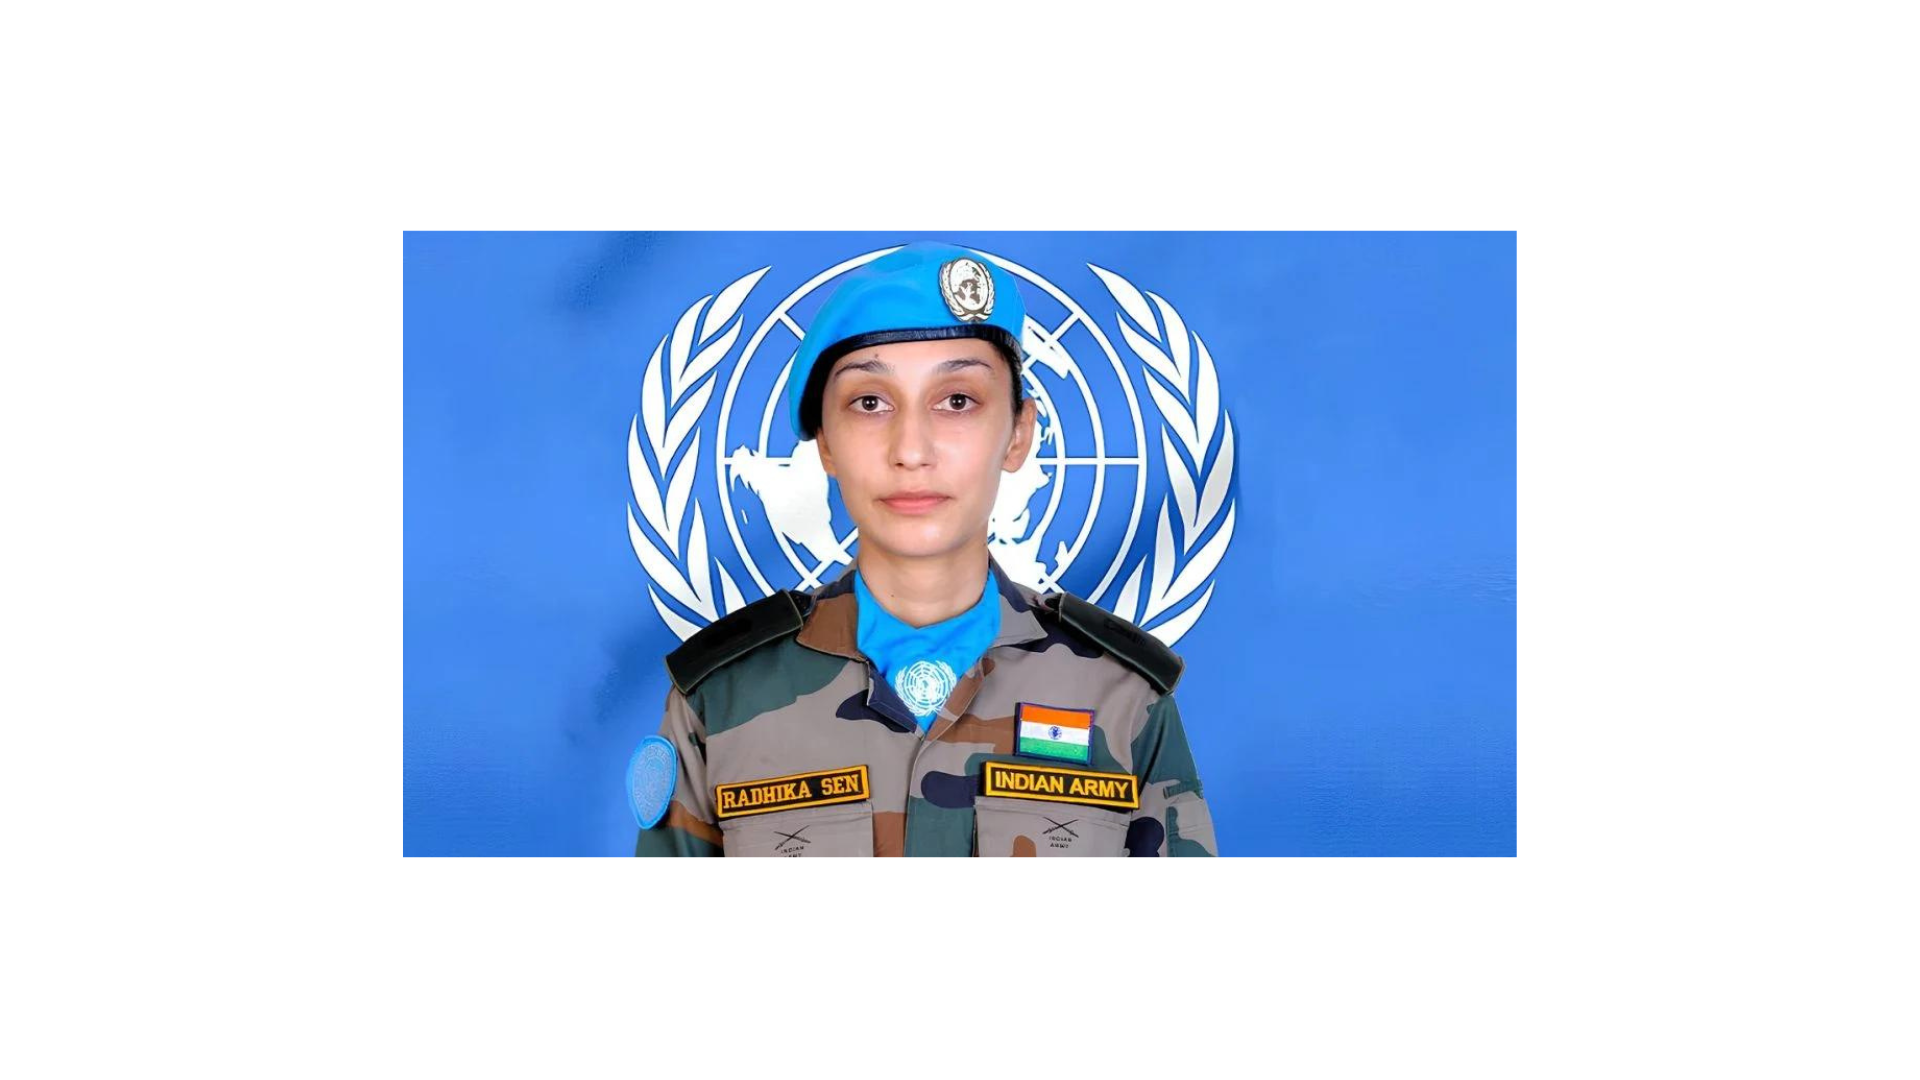 Explained: Who Is Major Radhika Sen, Set To Receive UN Gender Advocate Award?